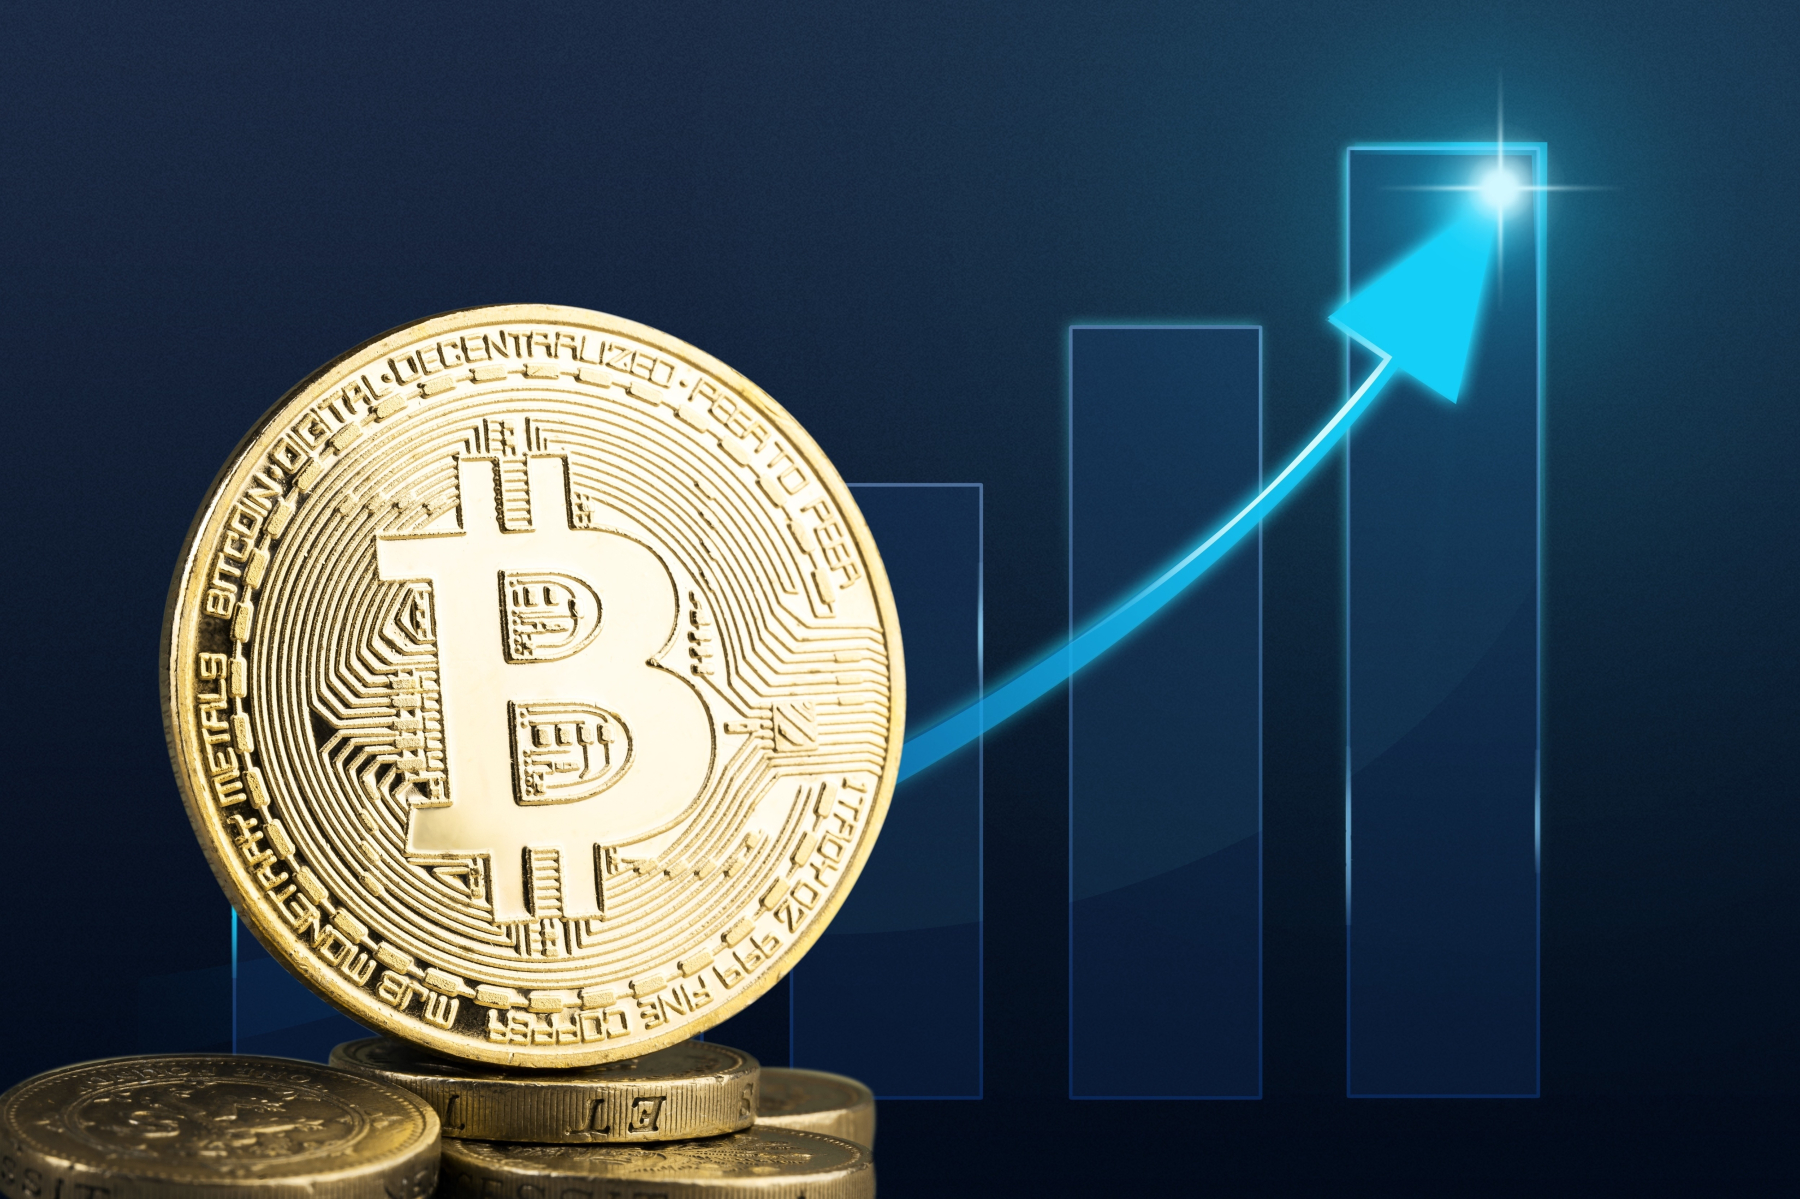 Billionaire Tim Draper sticks to his prediction: “Bitcoin goes to $250,000”
